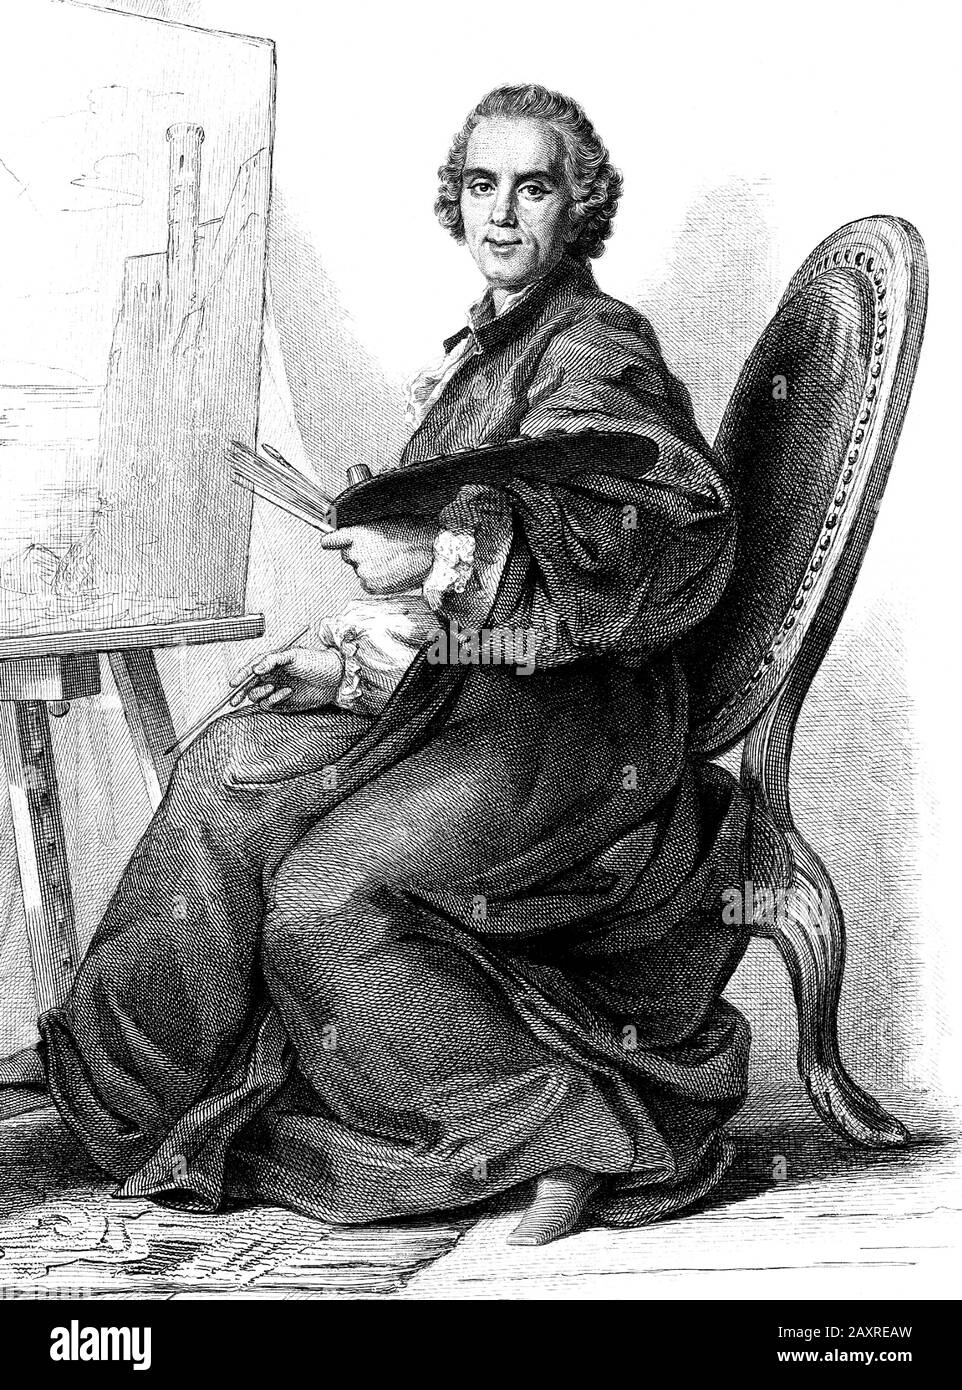 1750 ca , PARIS , FRANCE : The  french  painter and engraver CLAUDE JOSEPH VERNET ( 1714 - 1789 ). Portrait pubblished in 1846 by undentified french engraver . - ARTS - ARTE - PITTURA - painting - PITTORE - artist - artista - portrait - ritratto - tavolozza - palette - cavalletto - incisione - illustrazione - illustration  ----- ARCHIVIO GBB Stock Photo